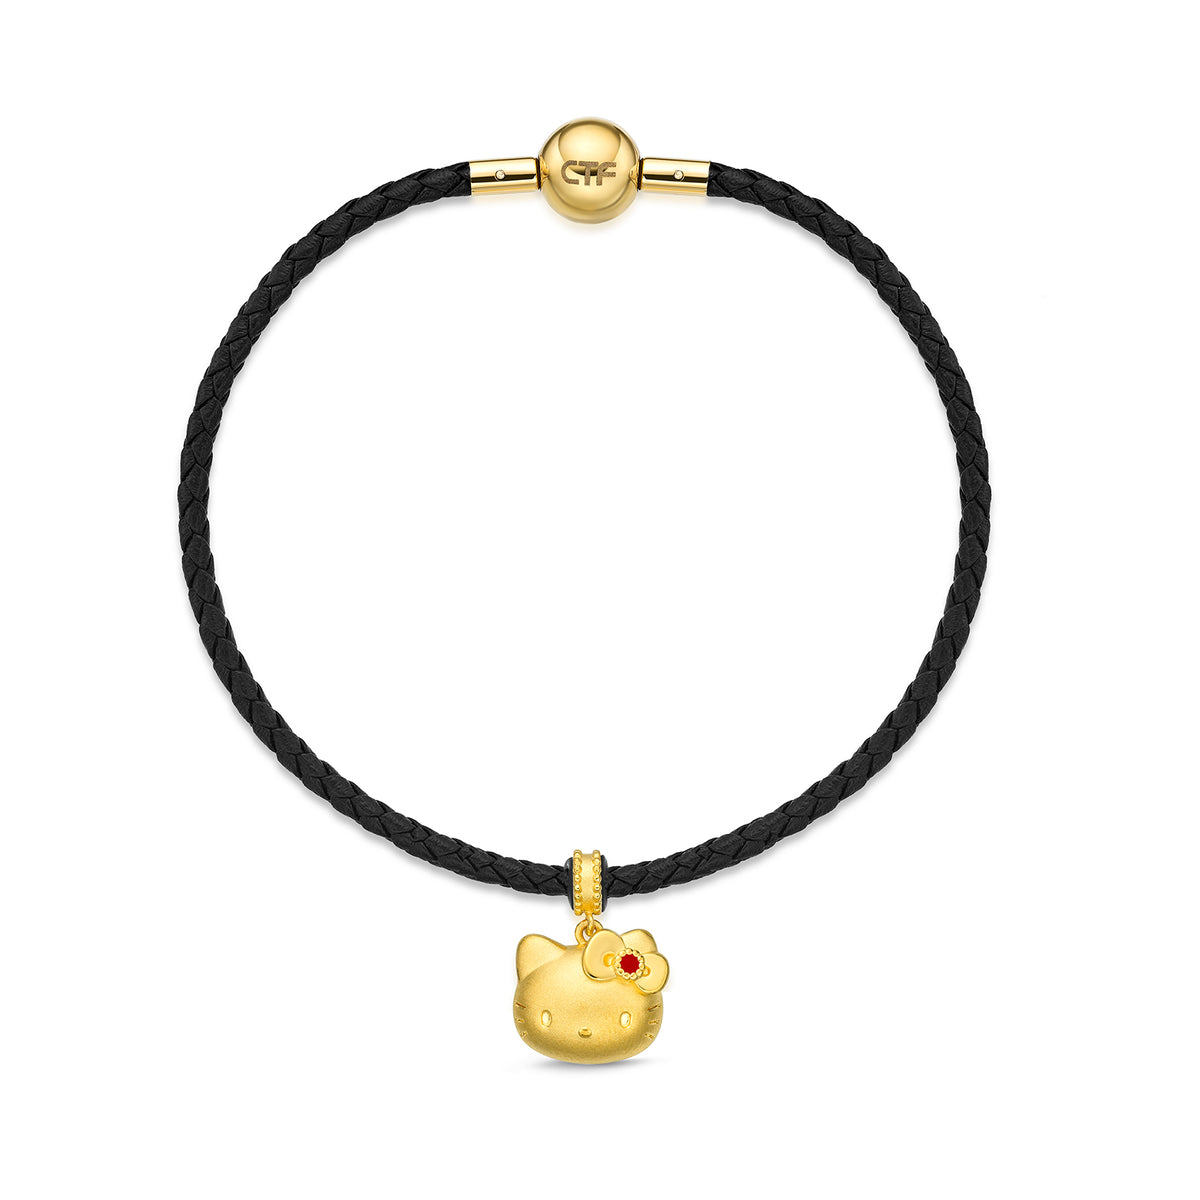 Gold Charm Bracelet Lotus Jewelry 24K Gold Vermeil Jewellery  Etsy  Lotus jewelry  gold Lotus jewelry Gold charm bracelet